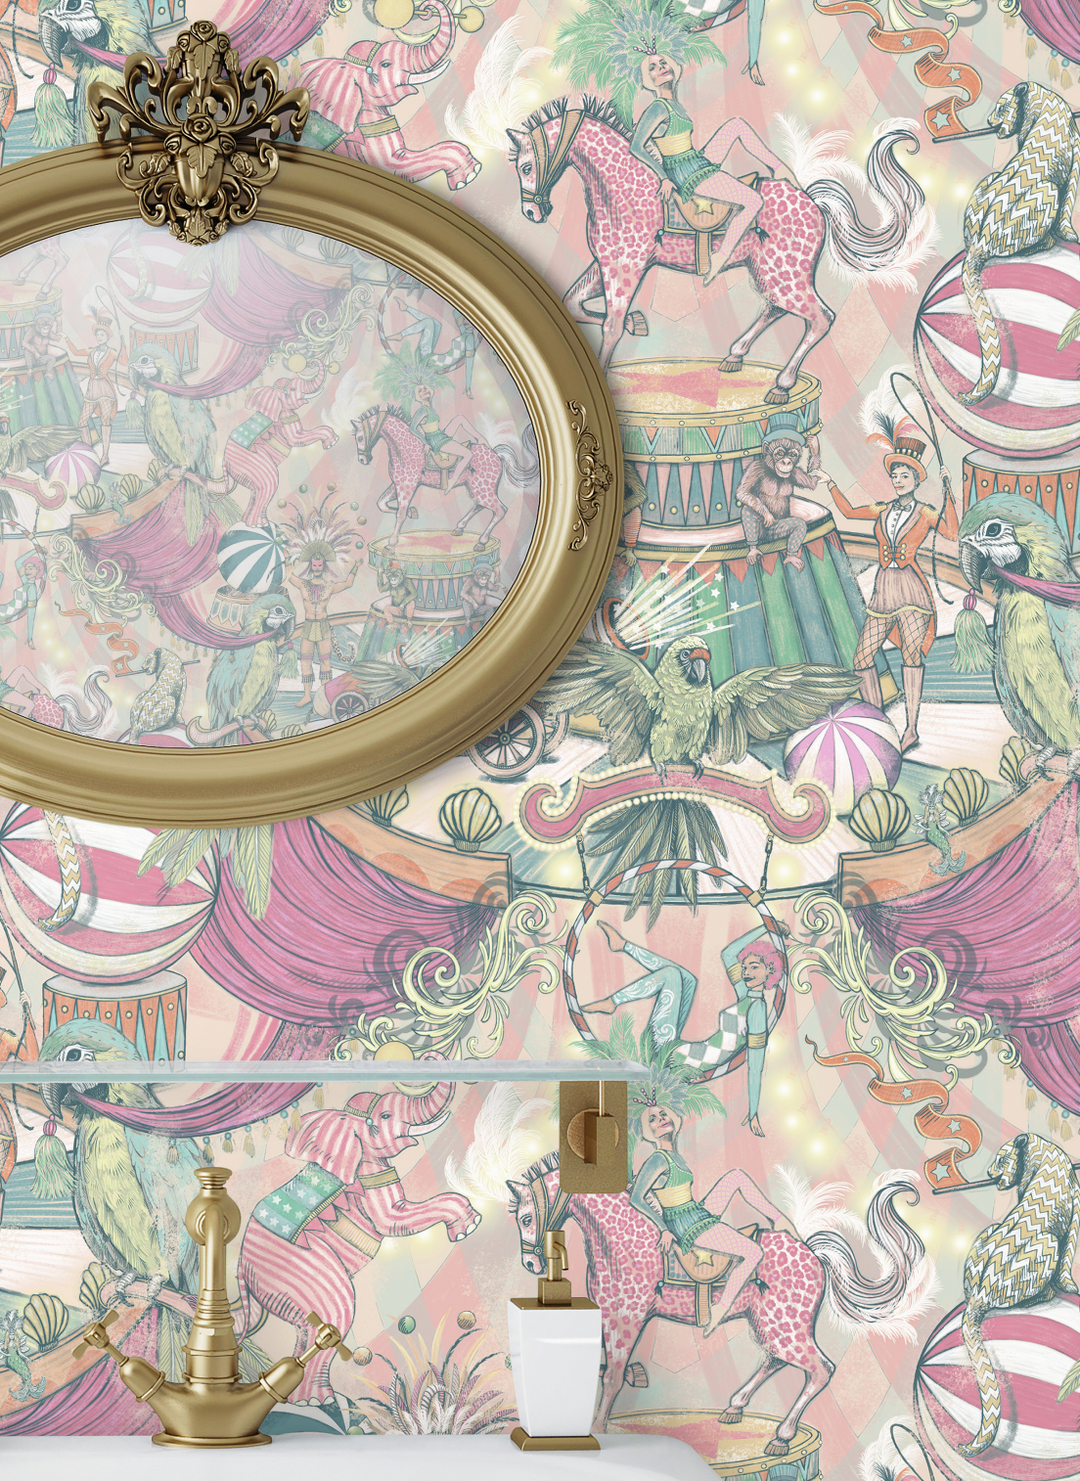 carnival-fever-funfair-pastel-pinks-animal-bathroom-wallpaper-cloakroom-wallpaper